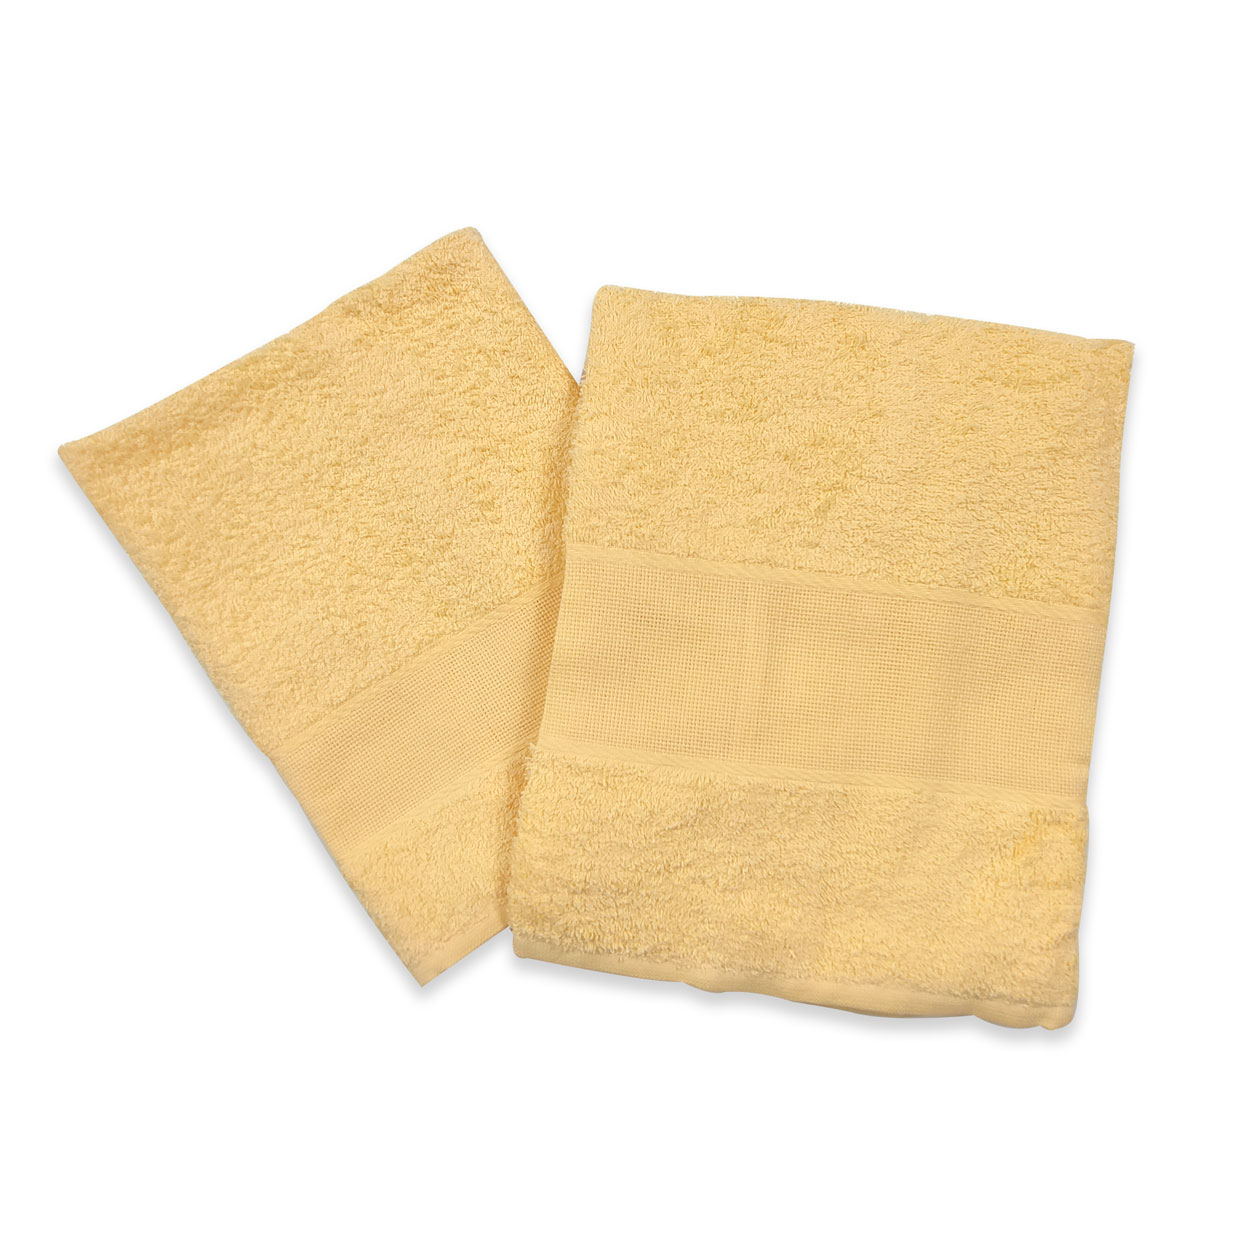 coppia-di-asciugamani-gialli